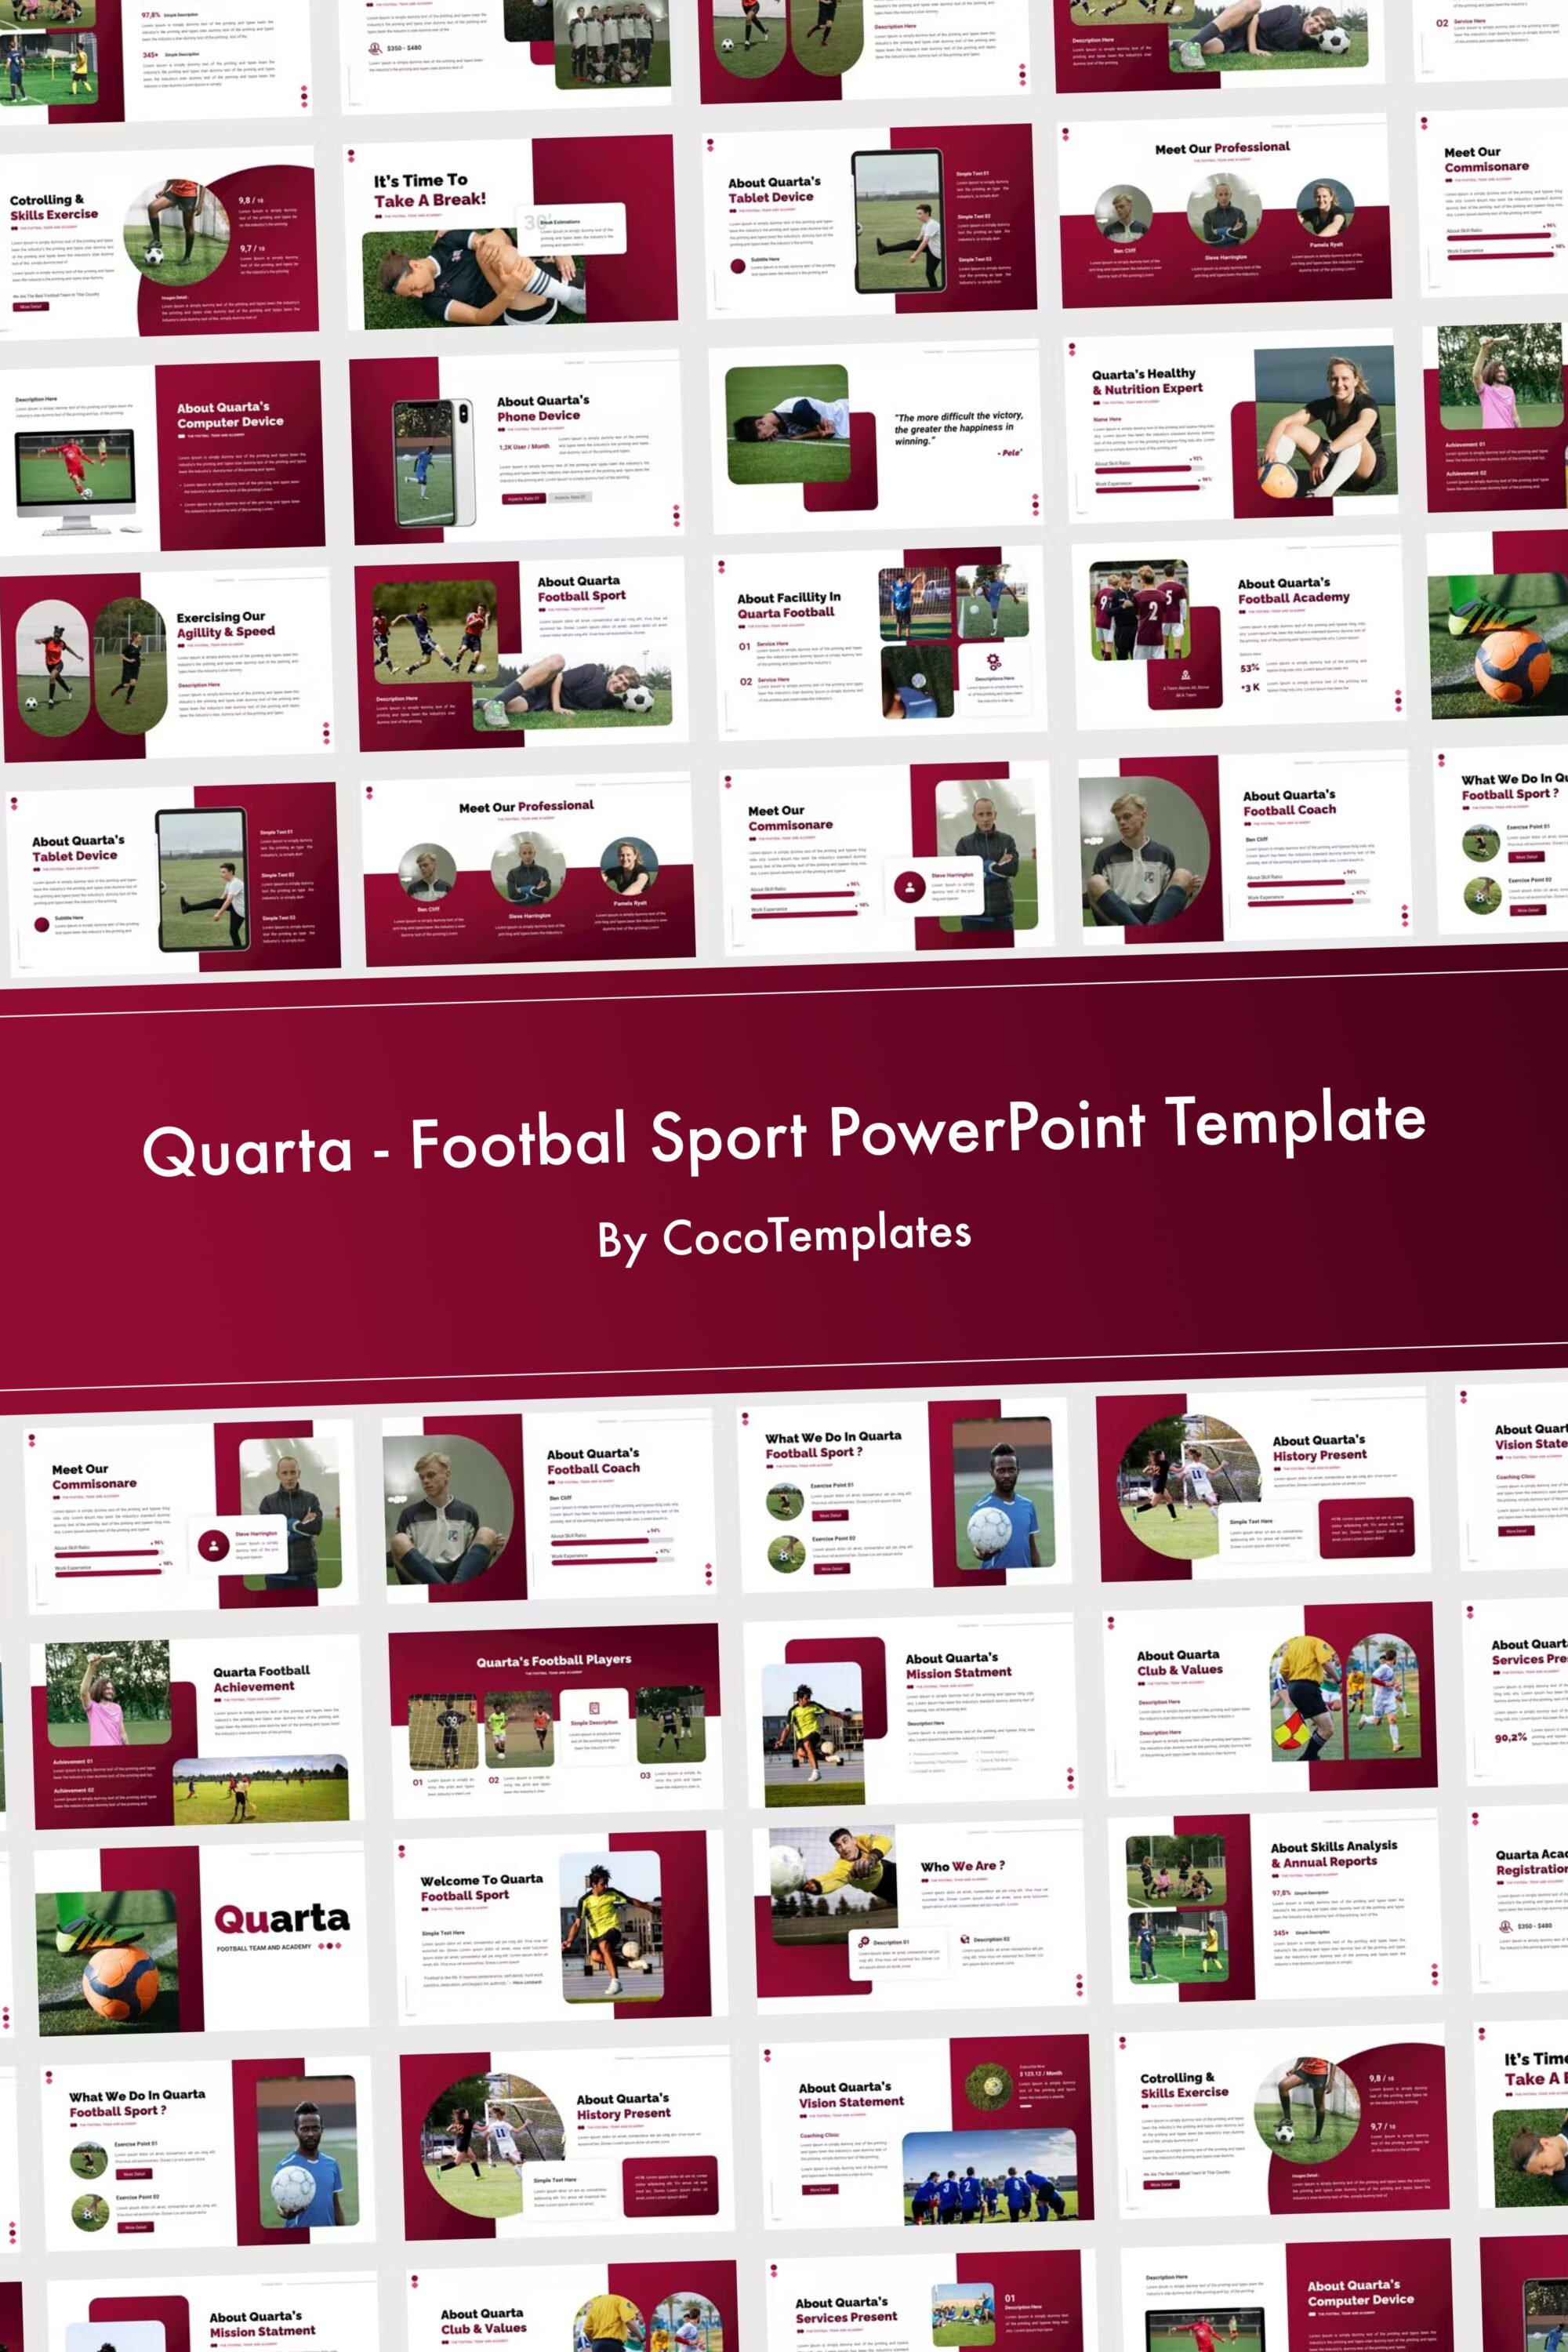 Quarta Footbal Sport PowerPoint Template - pinterest image preview.